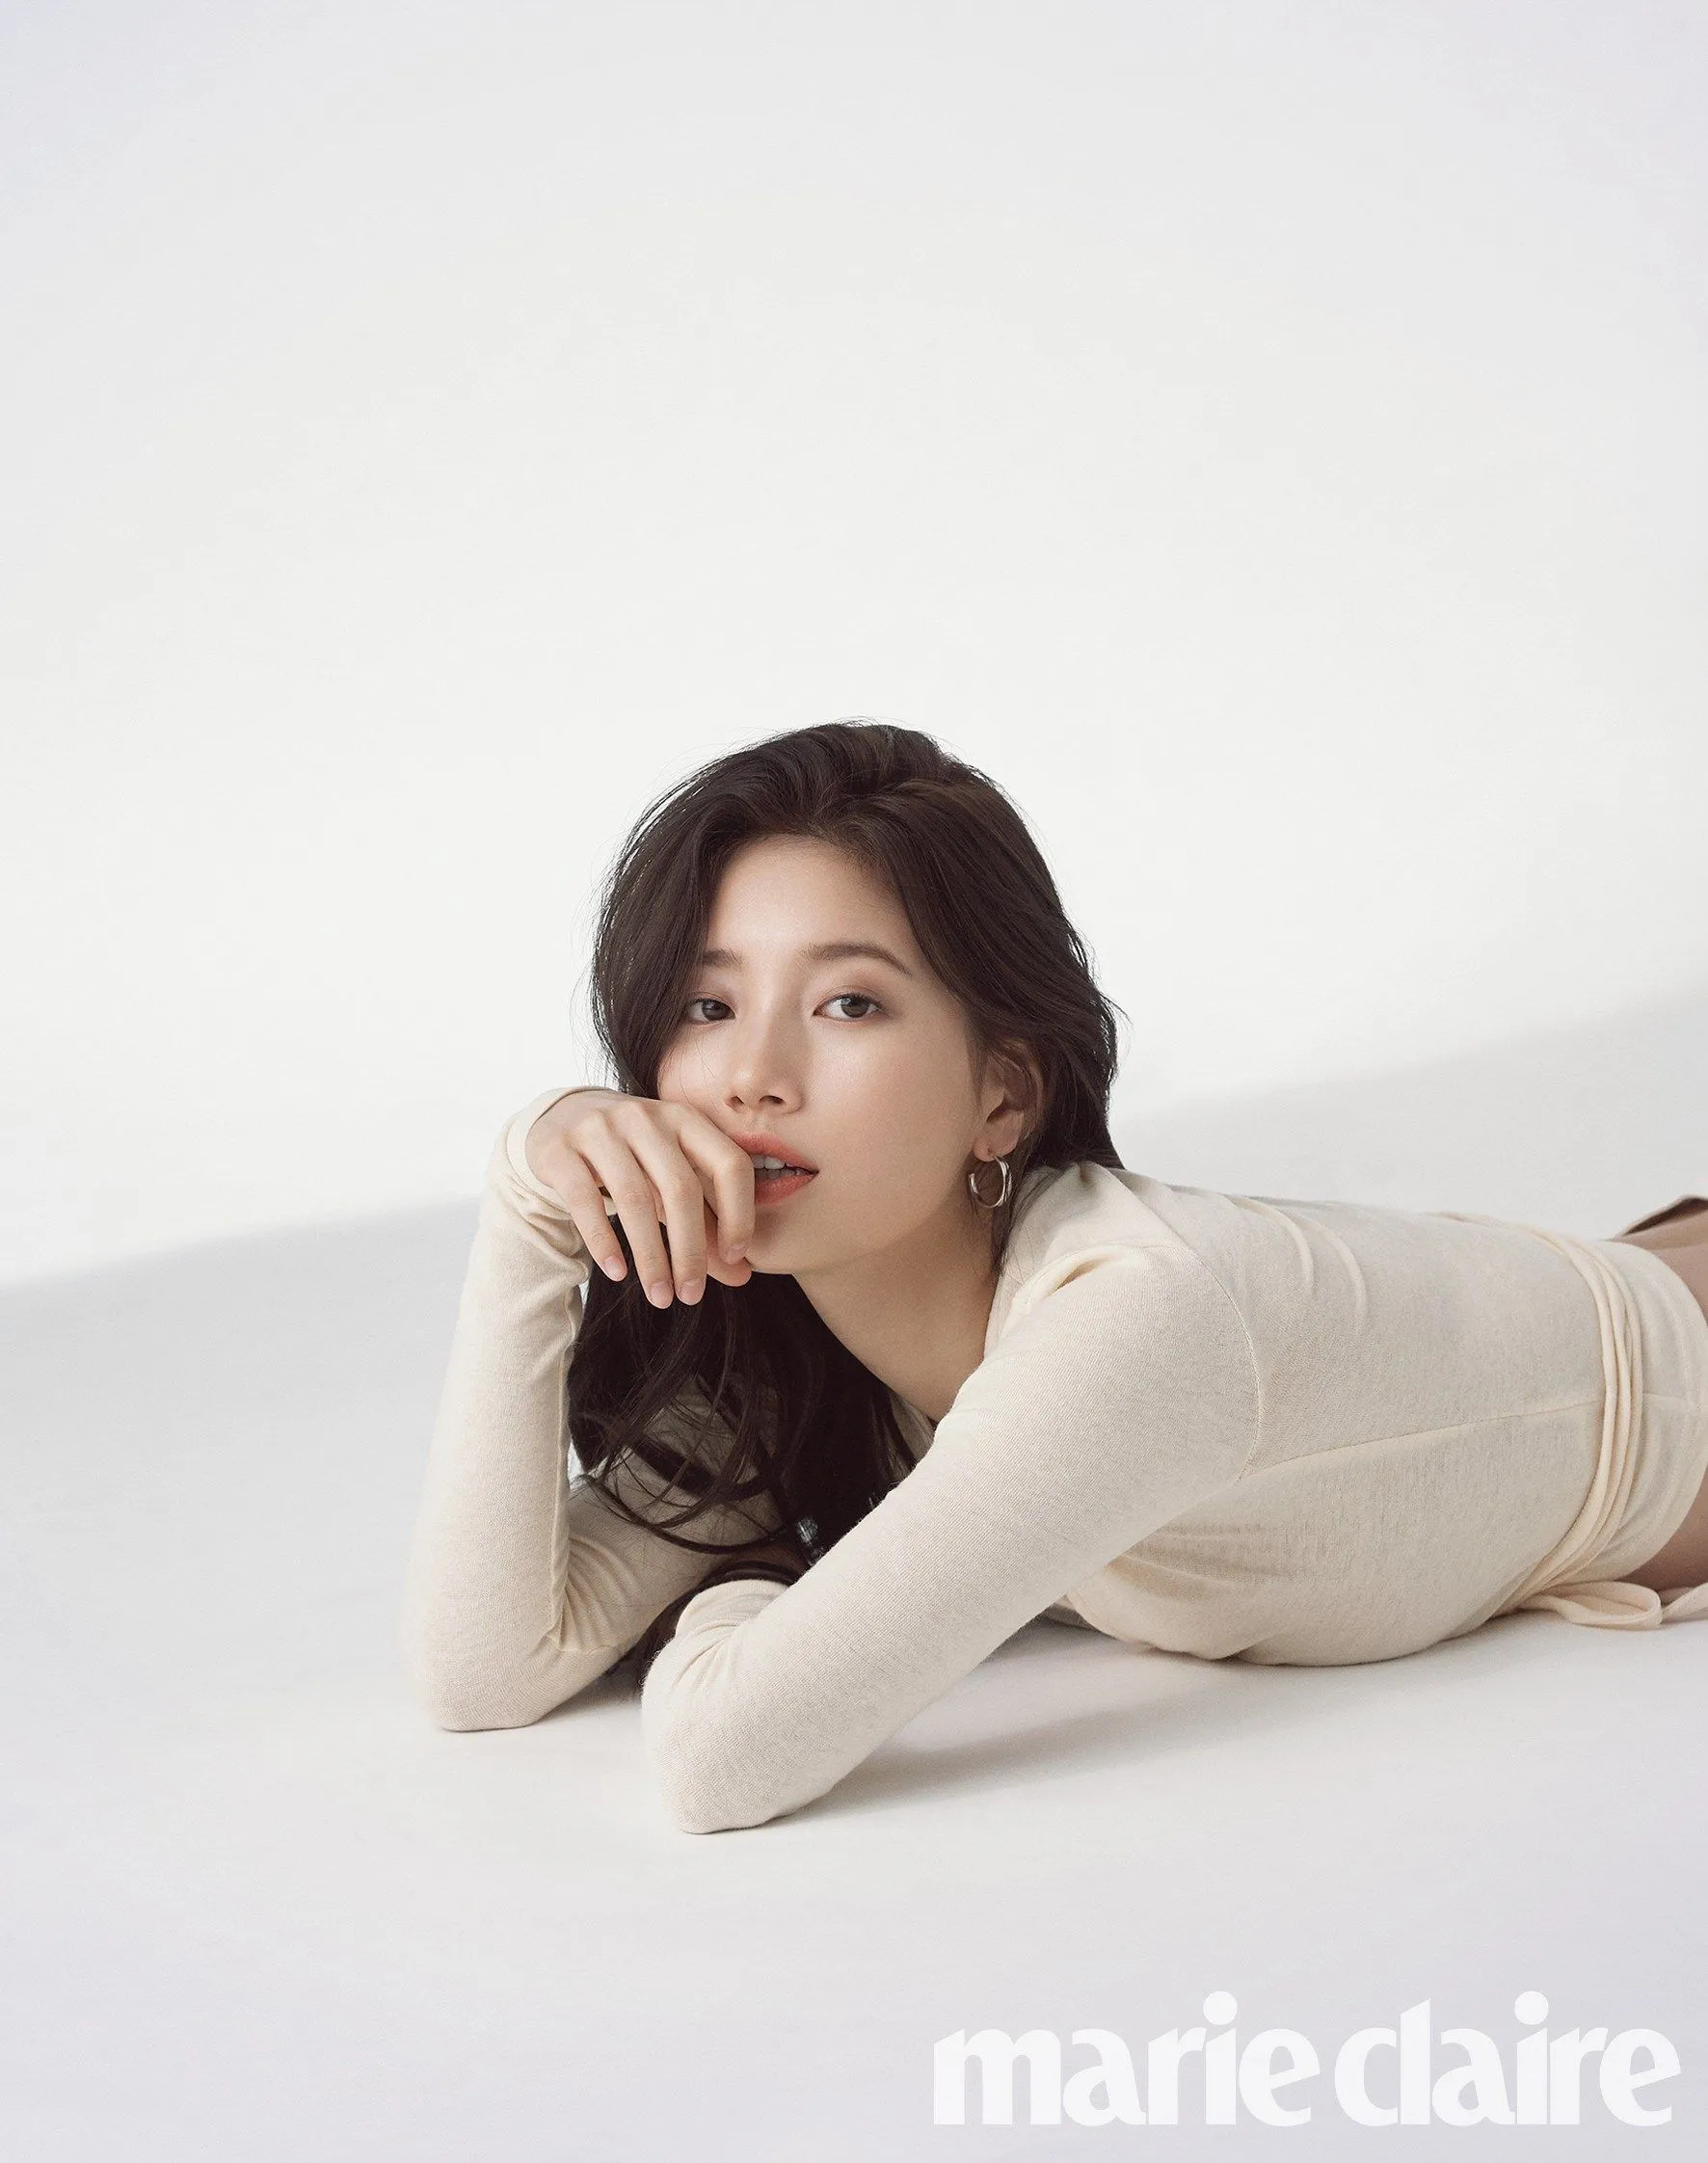 Suzy for Marie Claire Korea magazine February 2019 issue